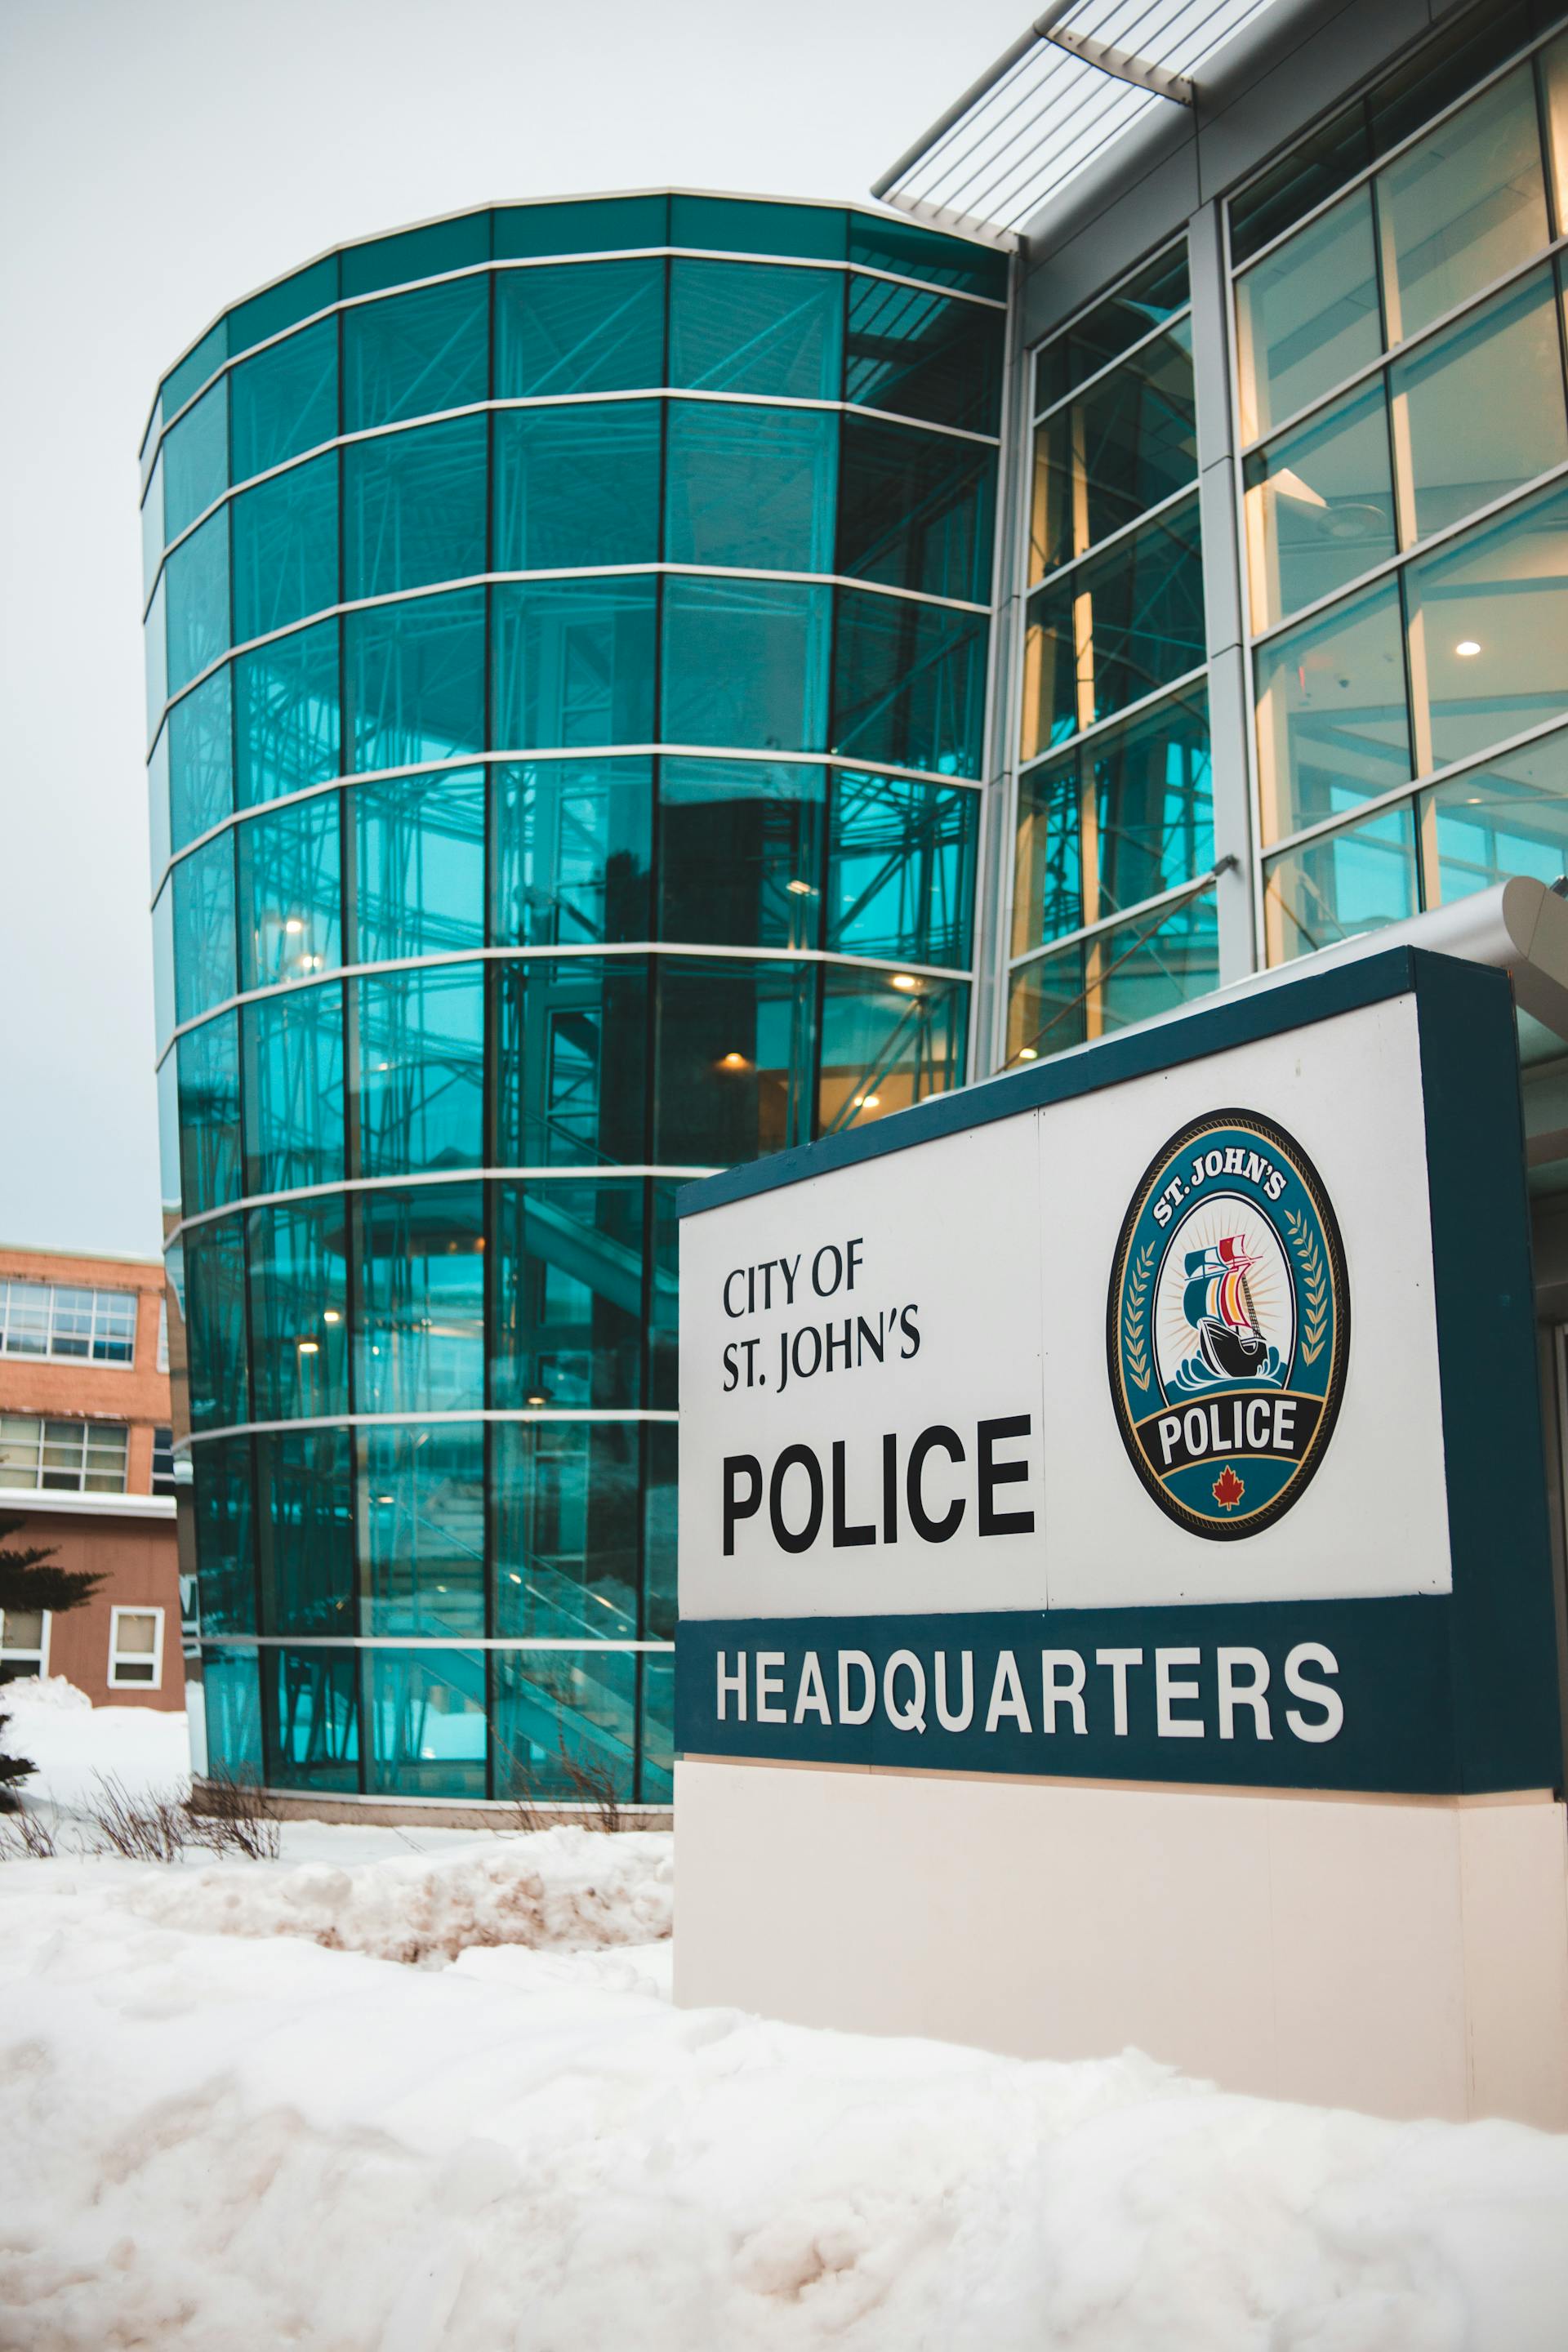 Police headquarters | Source: Pexels